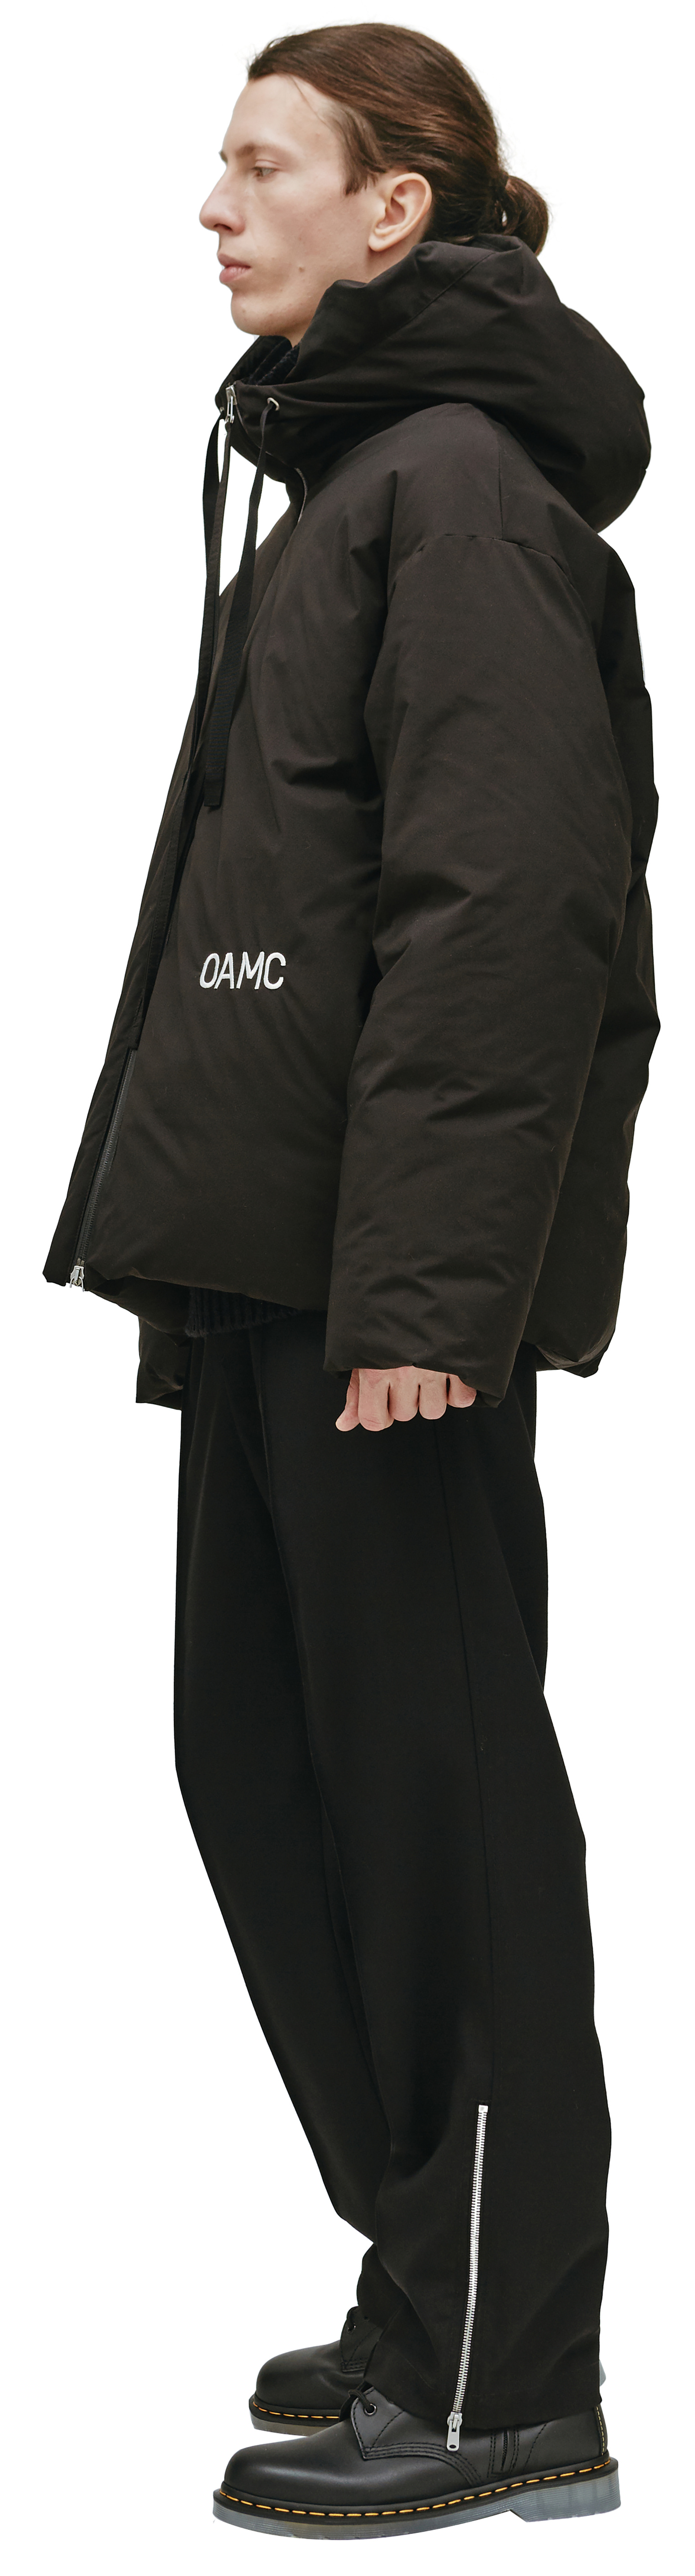 OAMC Peacemaker puff jacket